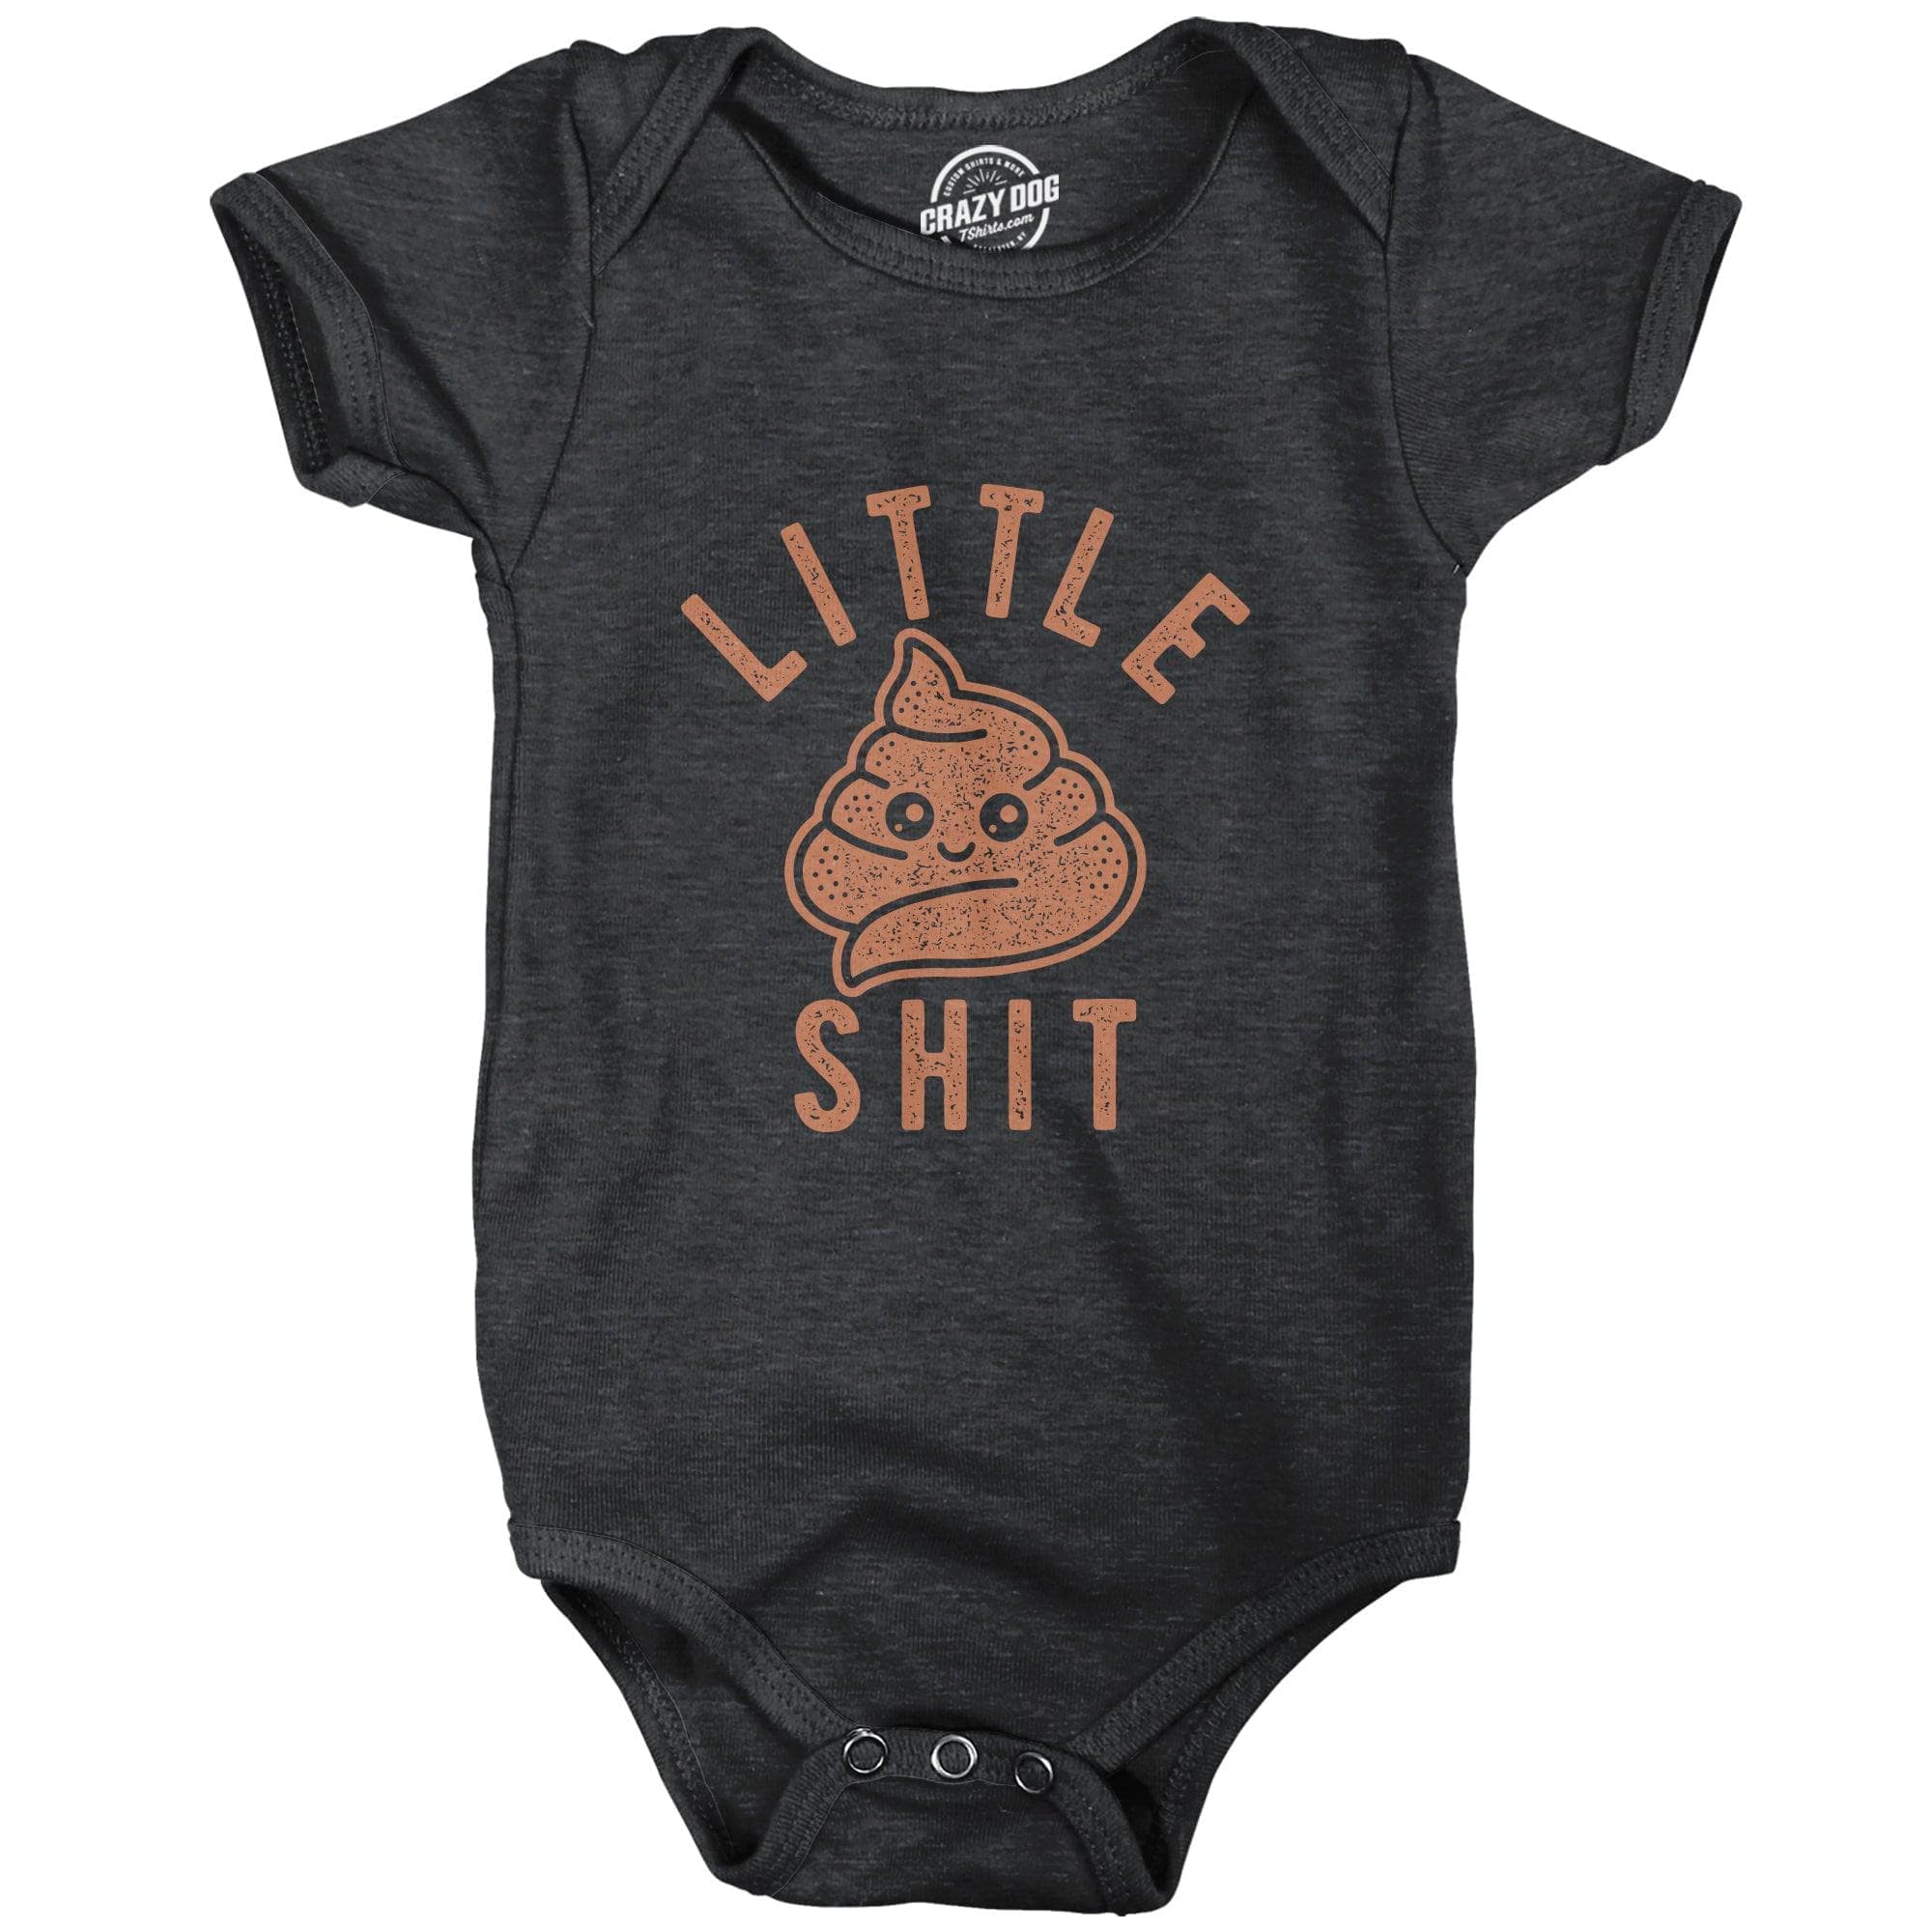 Little Shit Baby Bodysuit  -  Crazy Dog T-Shirts